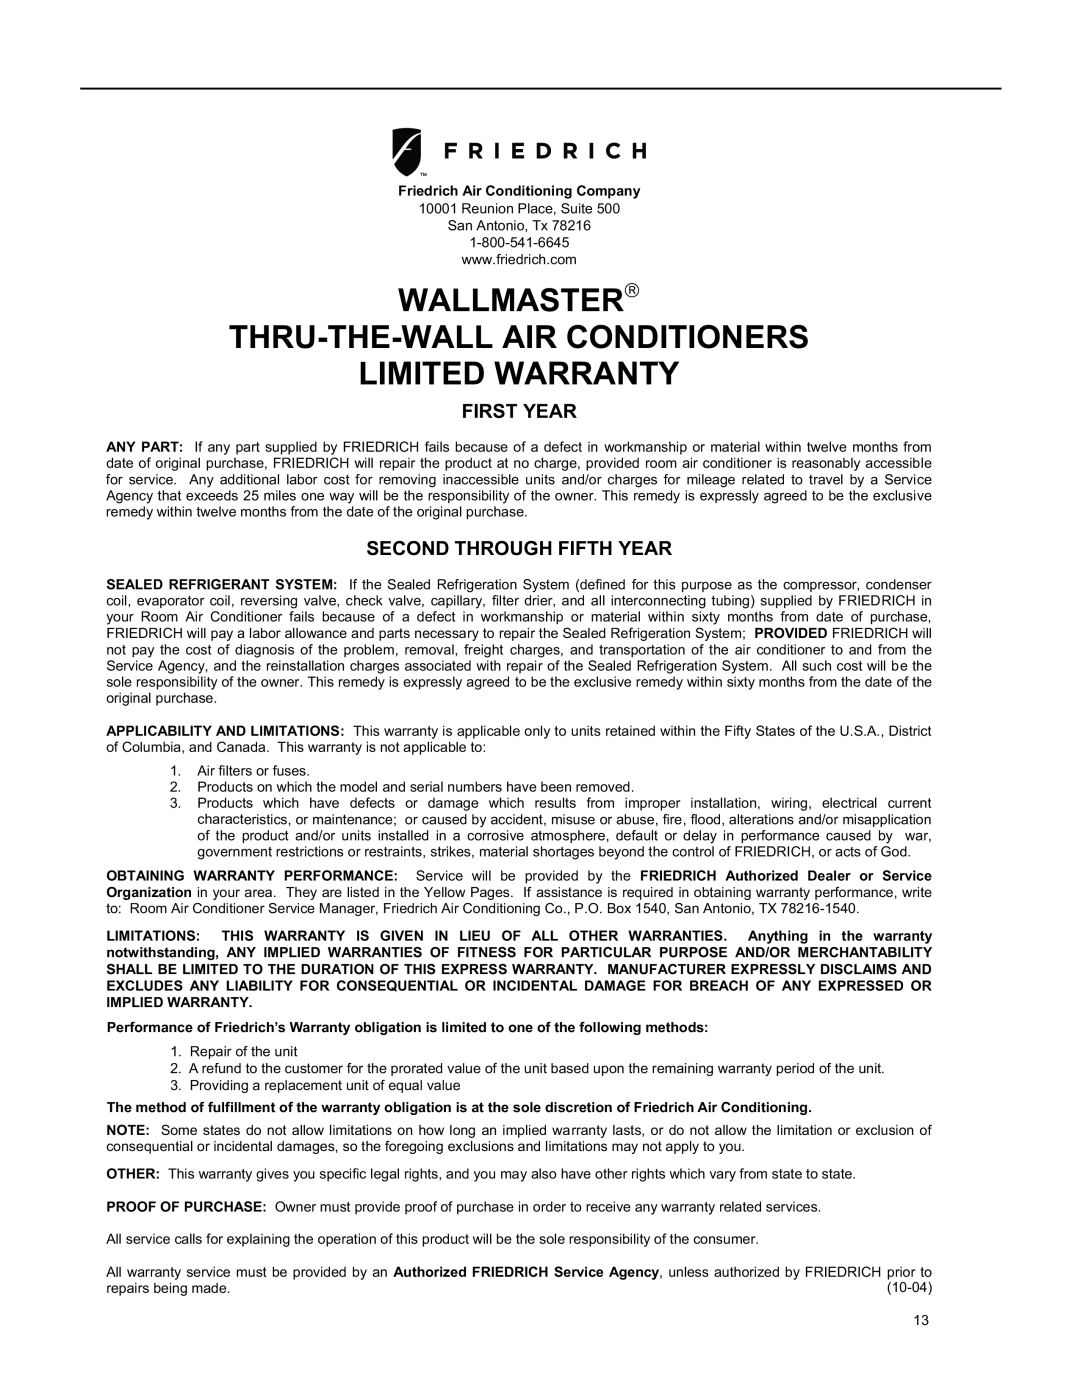 Friedrich WY09, WY12 Wallmaster Thru-The-Wallair Conditioners, Limited Warranty, First Year, Second Through Fifth Year 